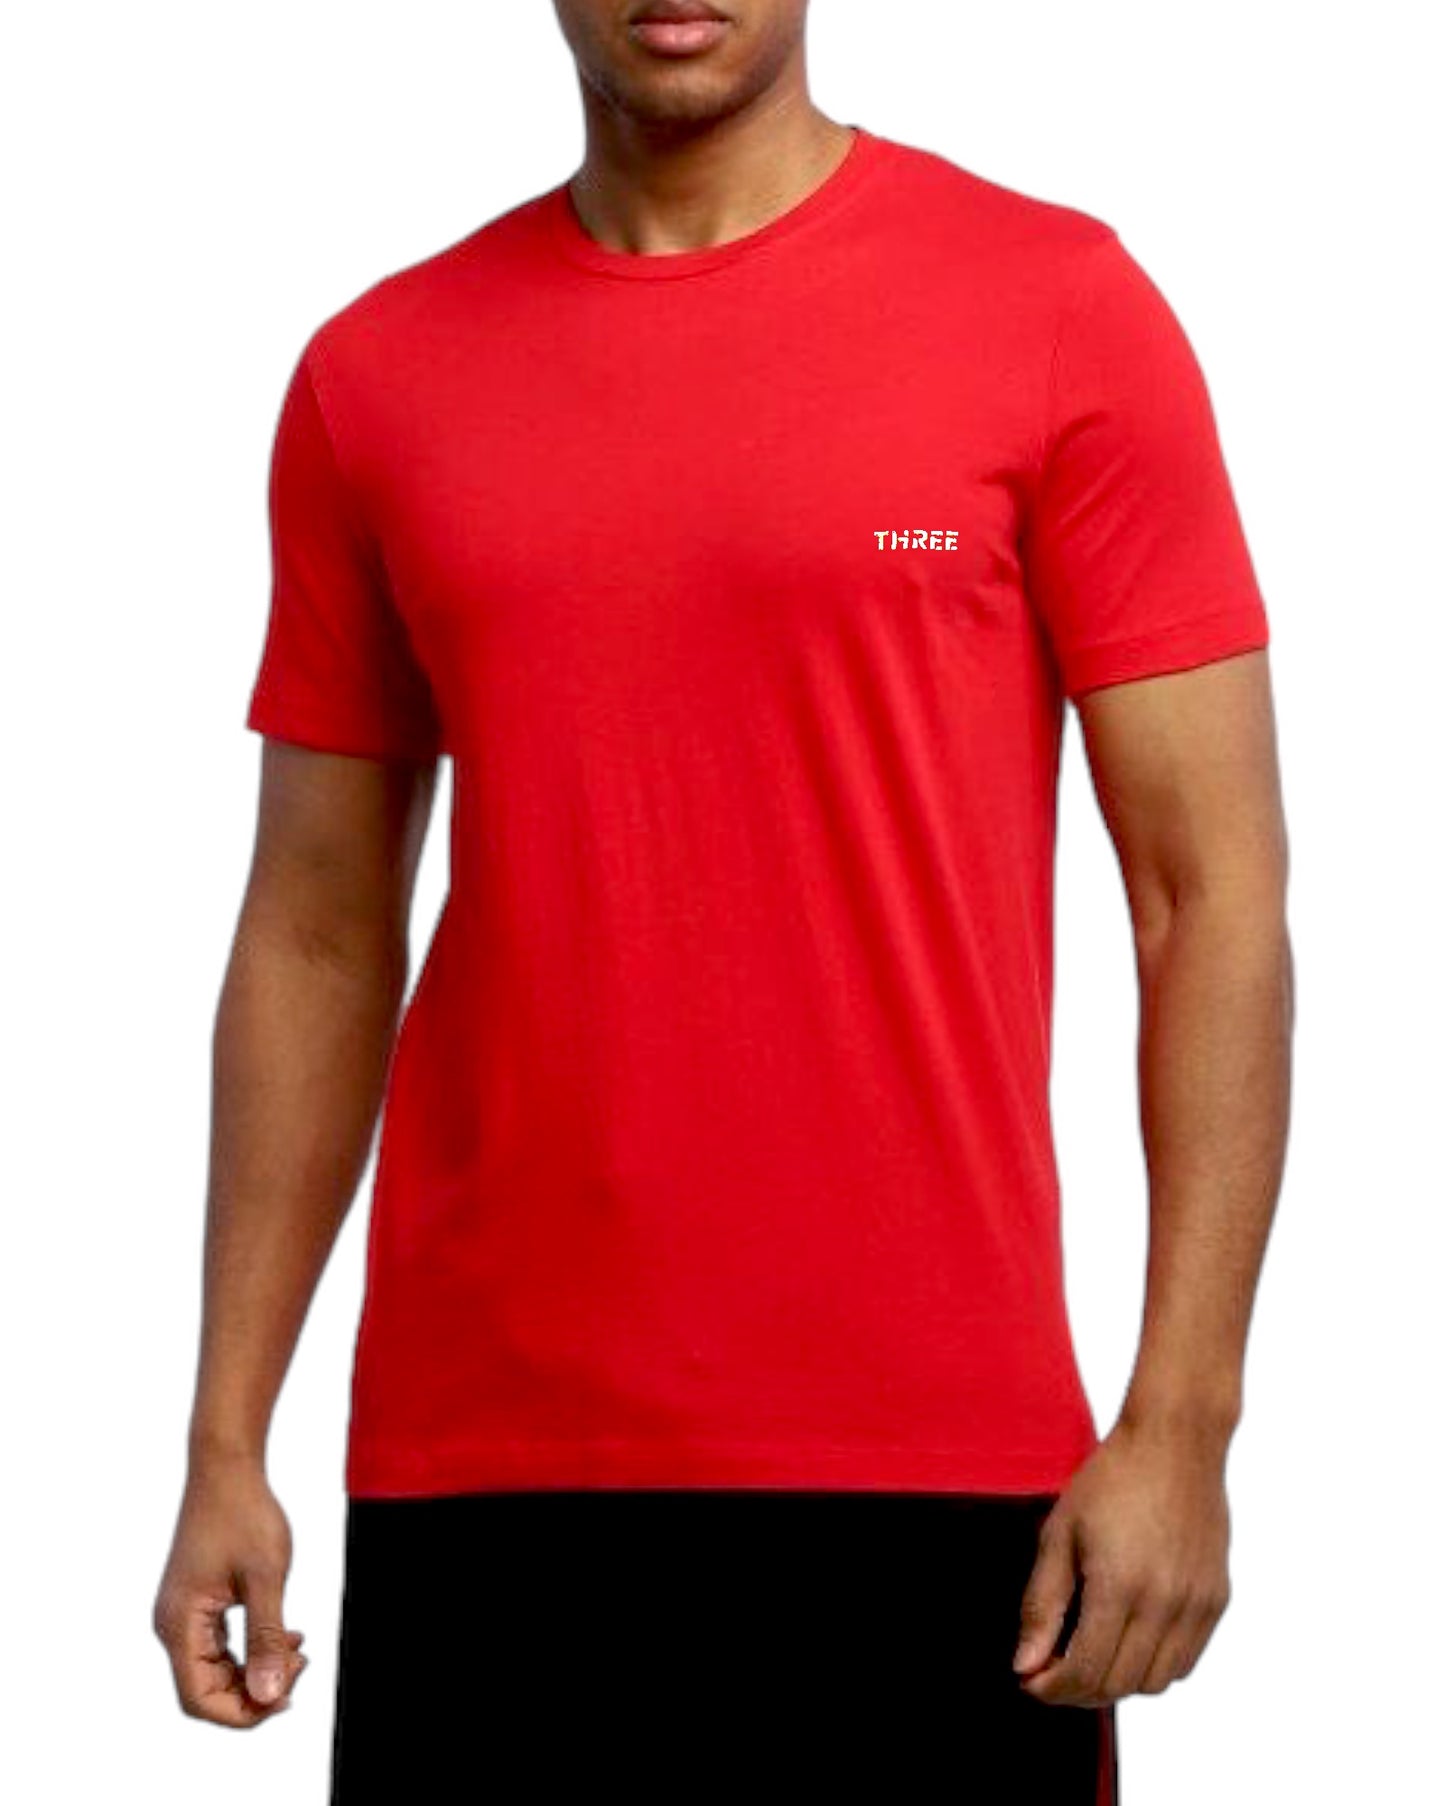 T-shirt basic red